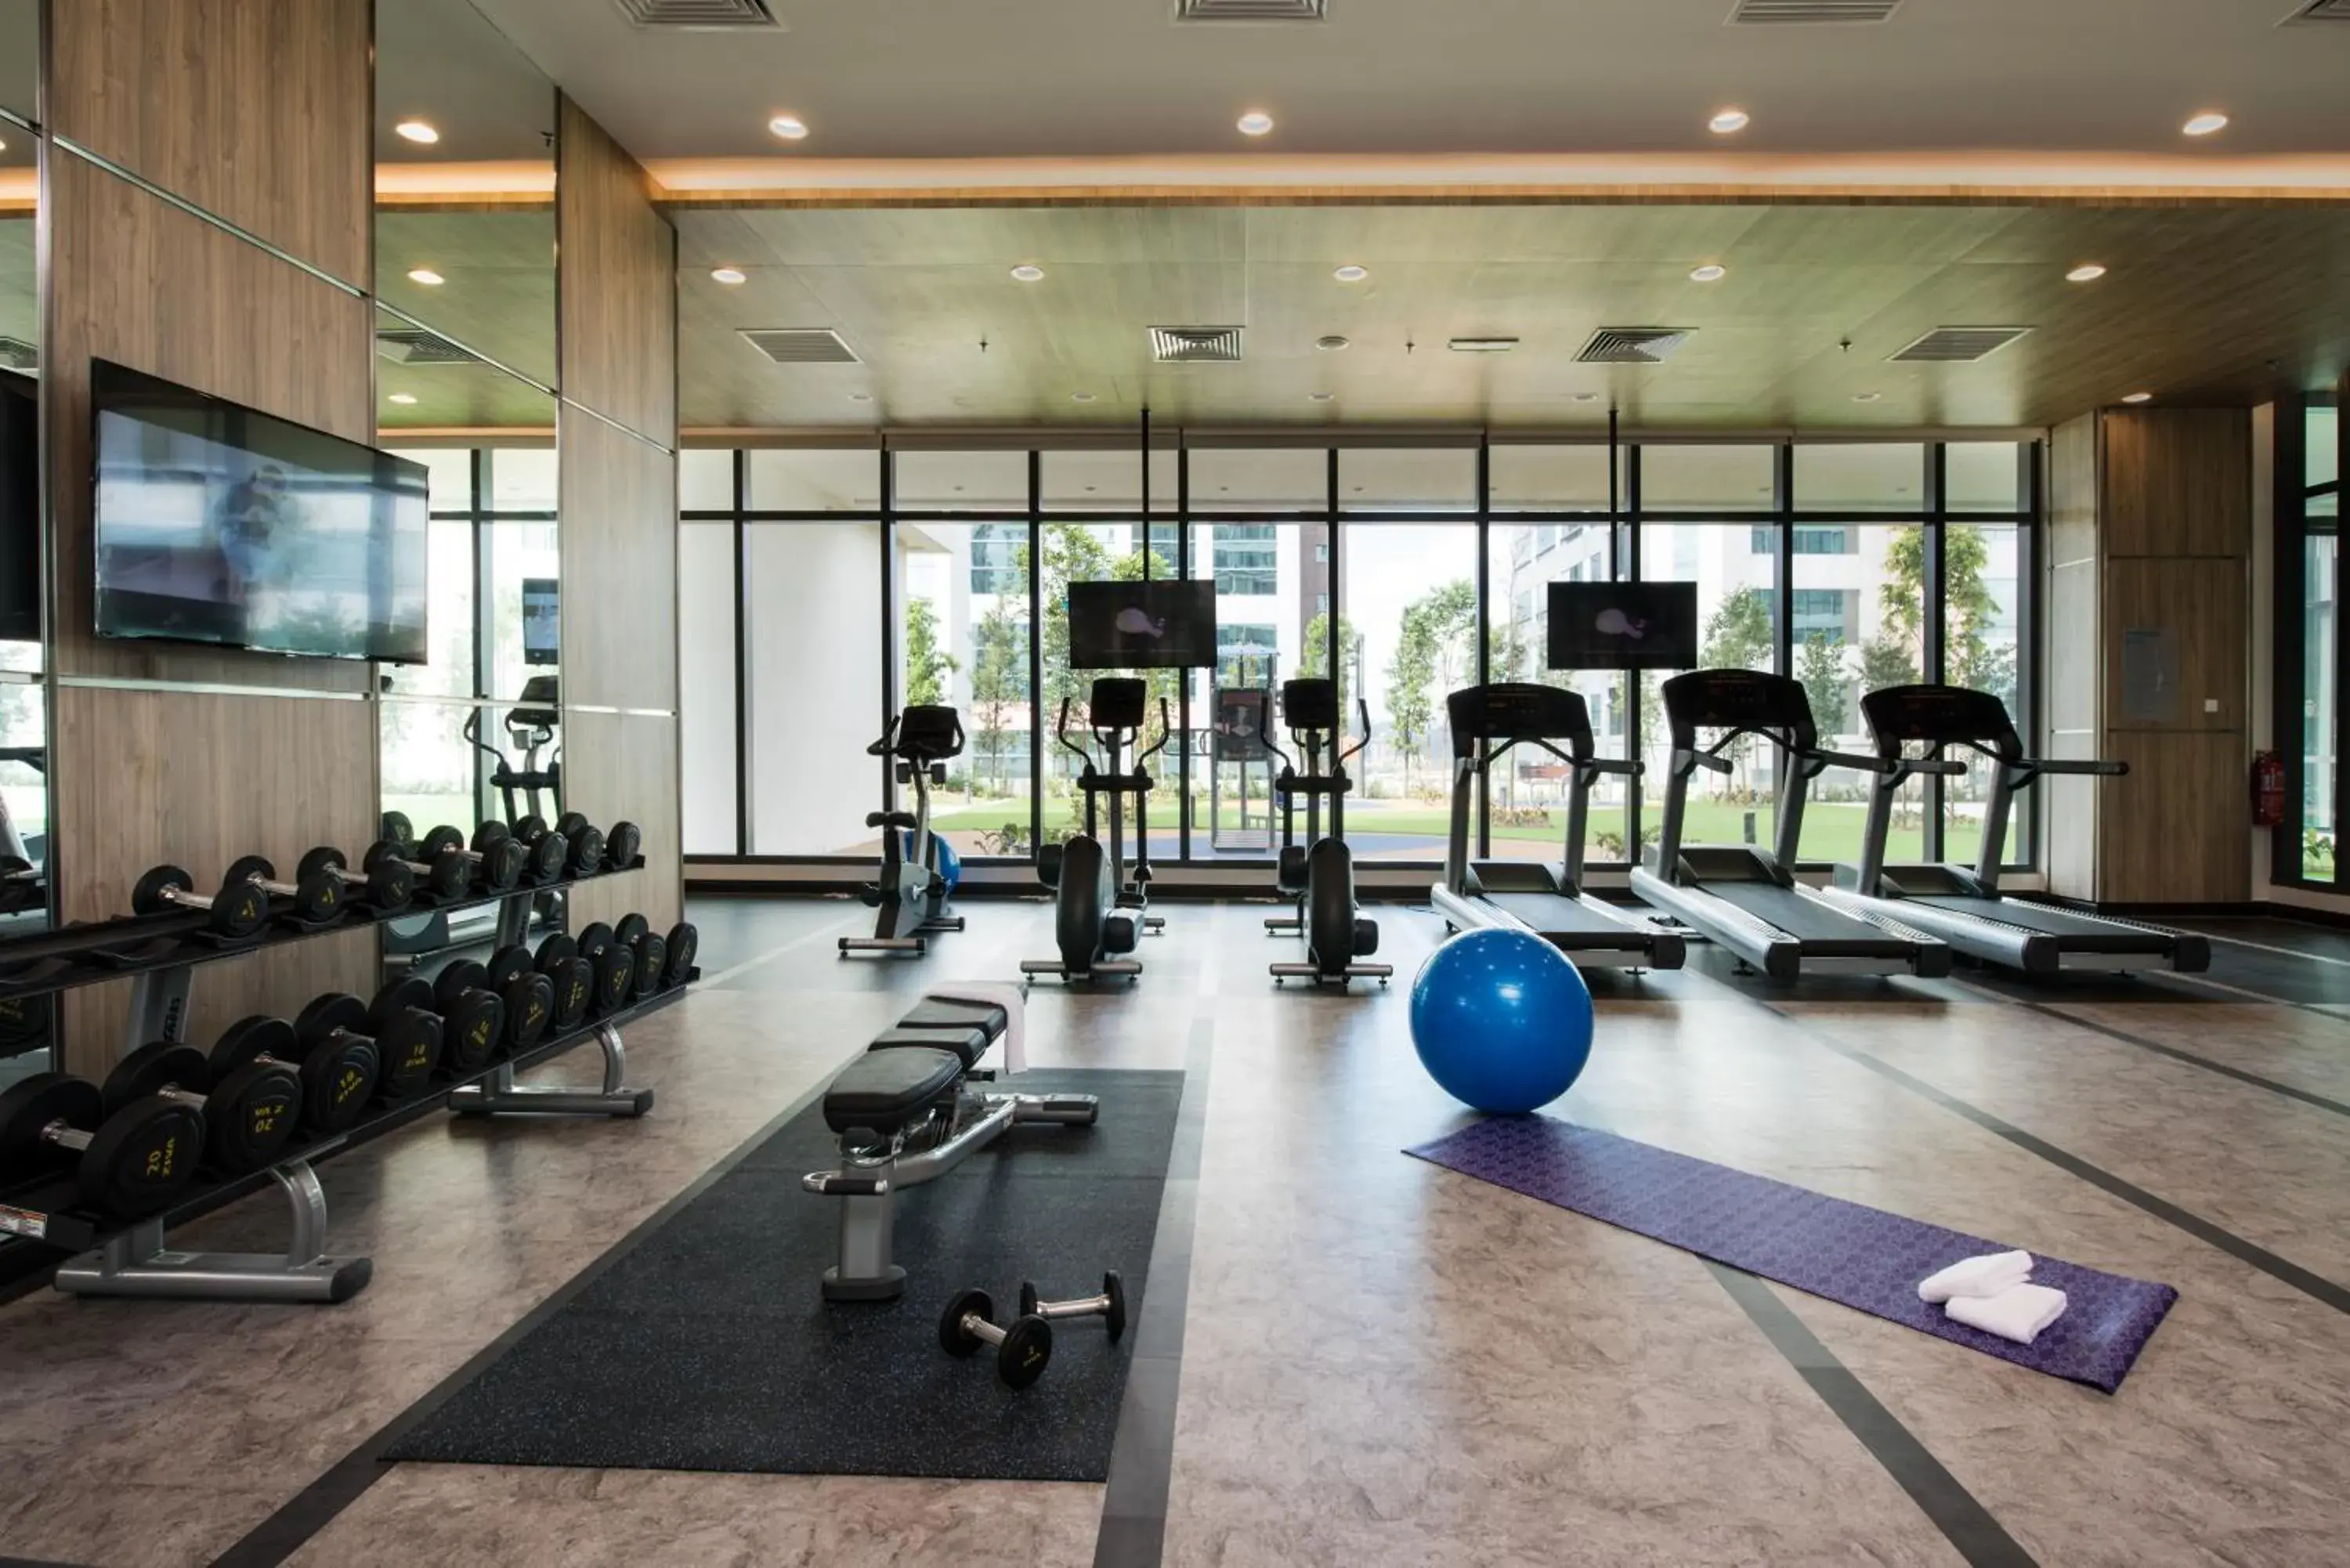 Fitness centre/facilities, Fitness Center/Facilities in Somerset Damansara Uptown Petaling Jaya